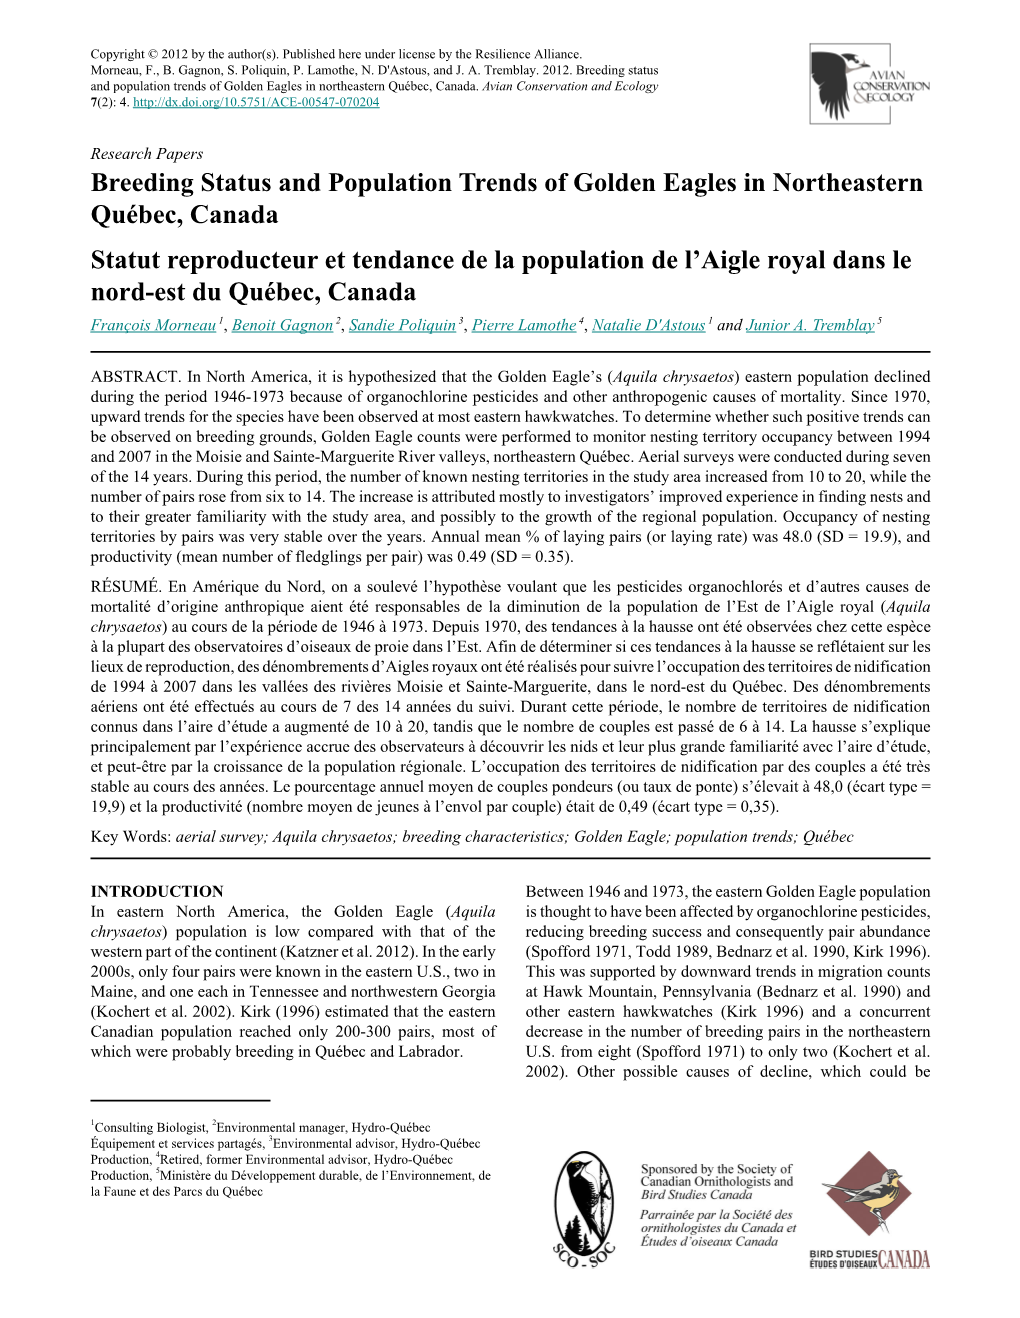 Breeding Status and Population Trends of Golden Eagles in Northeastern Québec, Canada